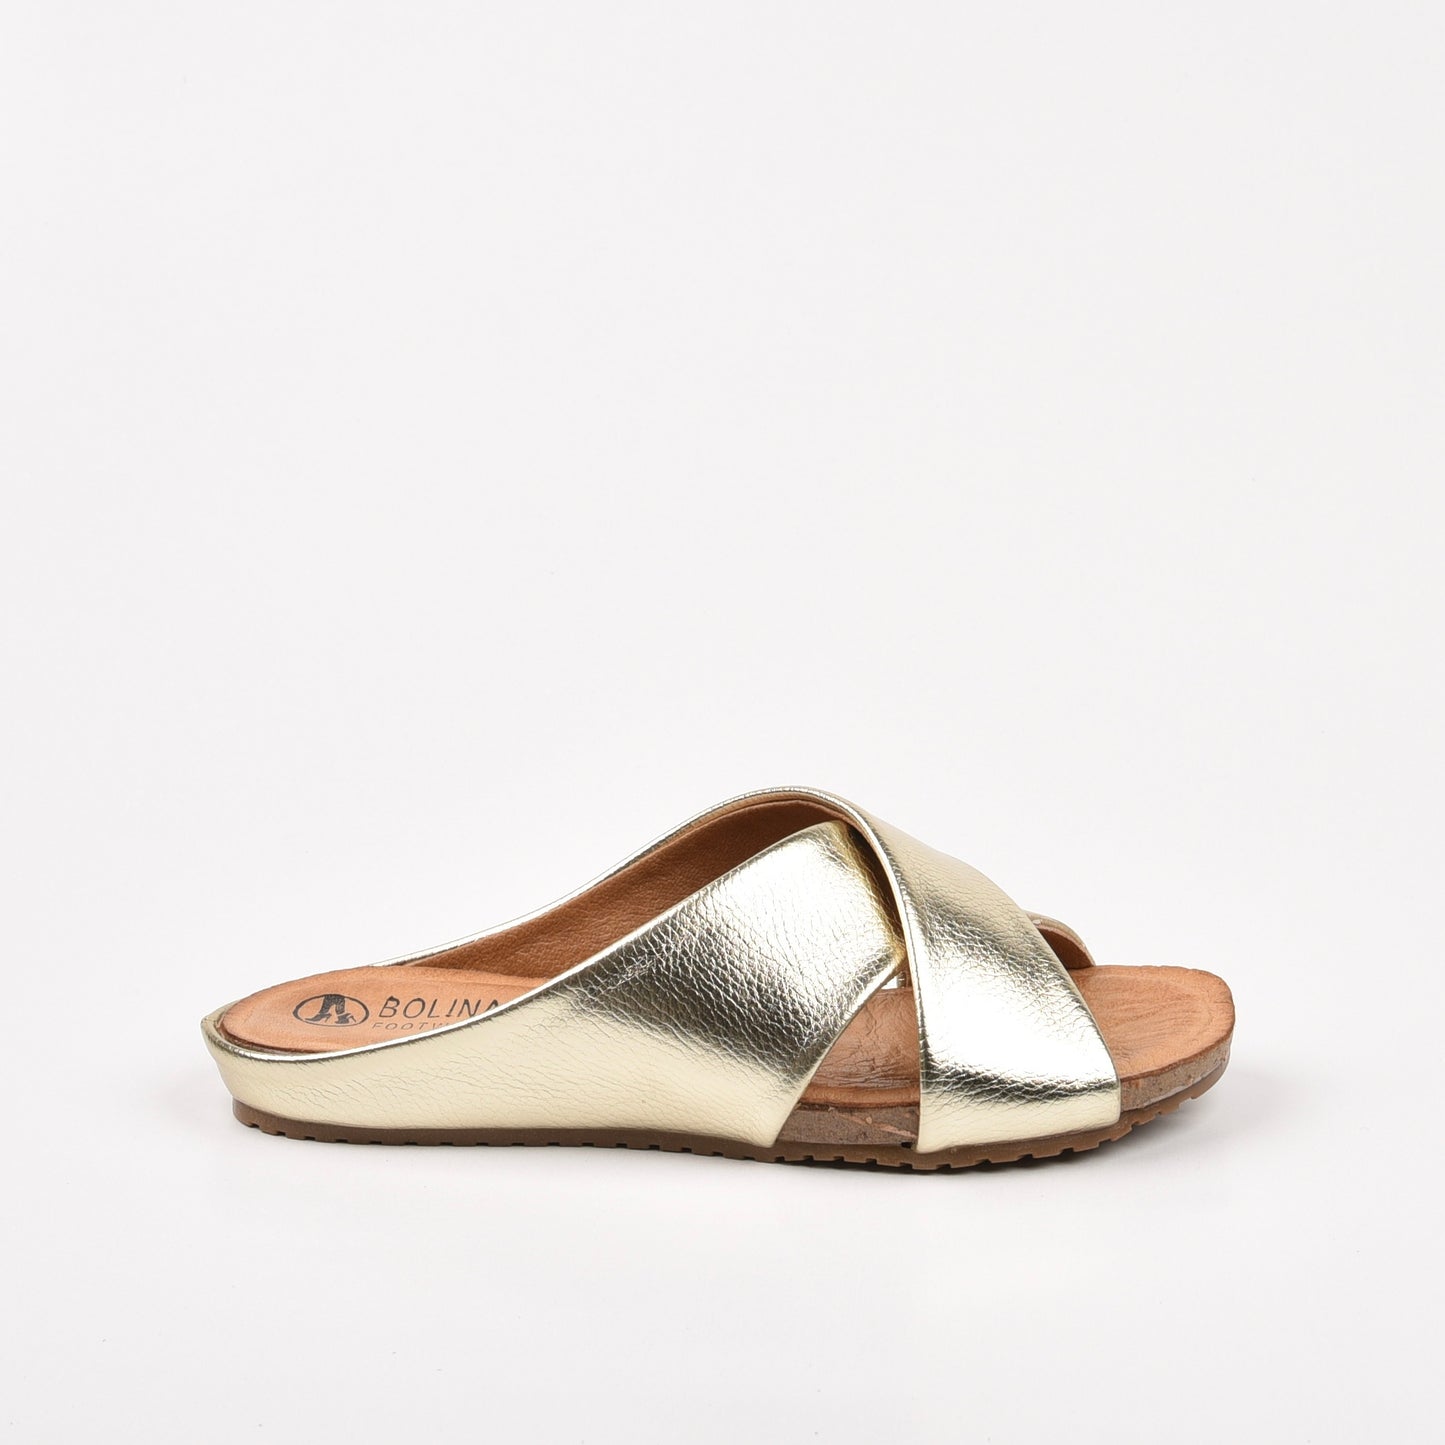 Shalapi slippers for women in gold